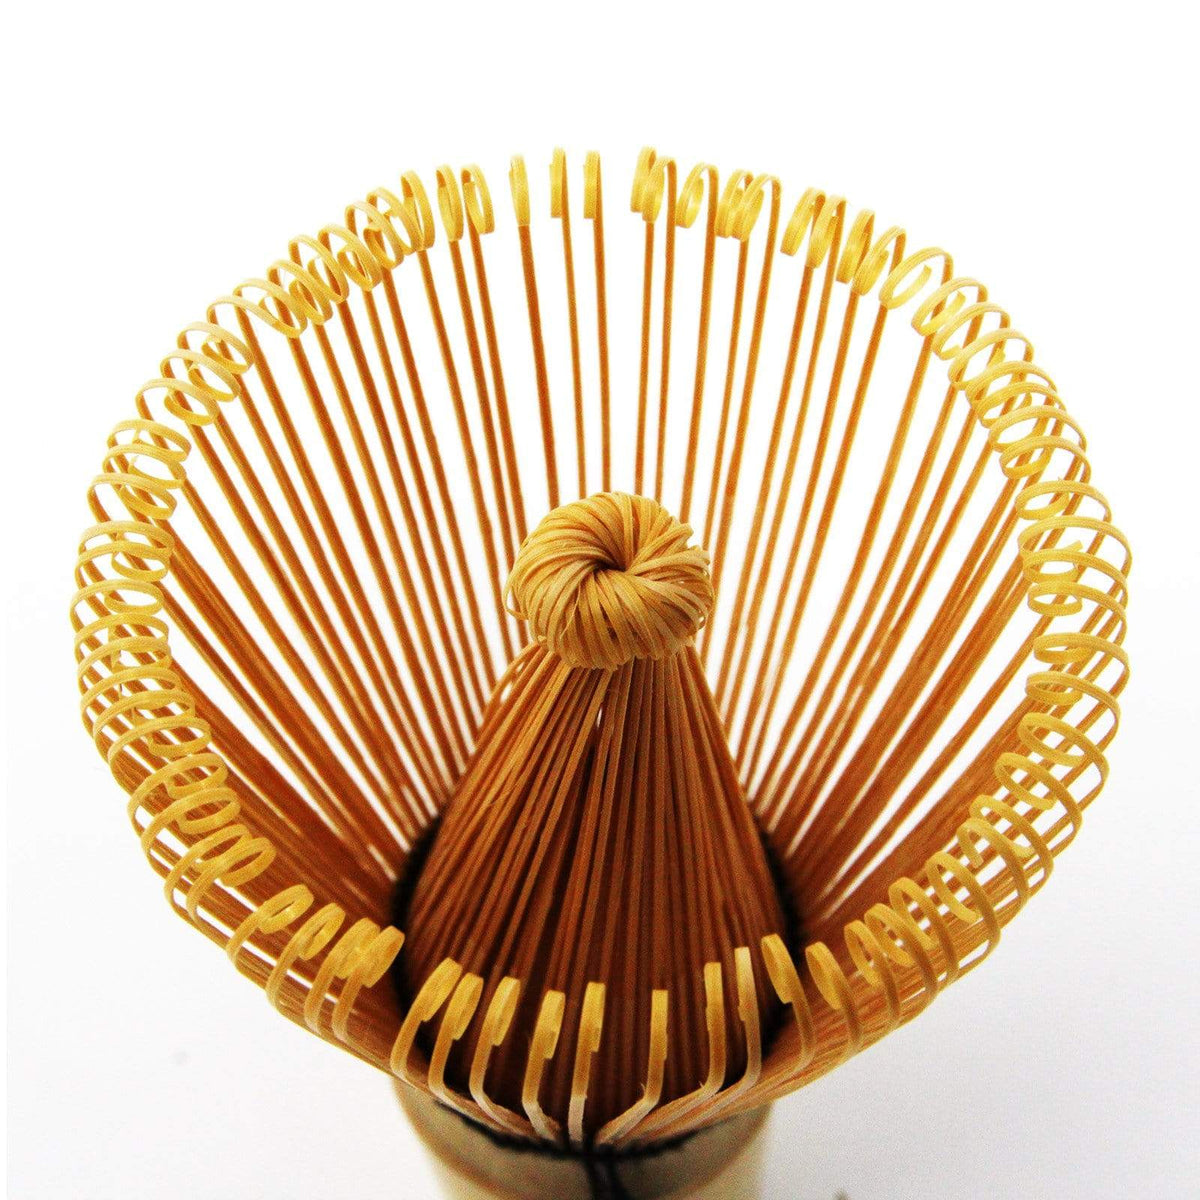 Bamboo Chasen Matcha Tea Whisk (100-Prong) Matcha Teaware